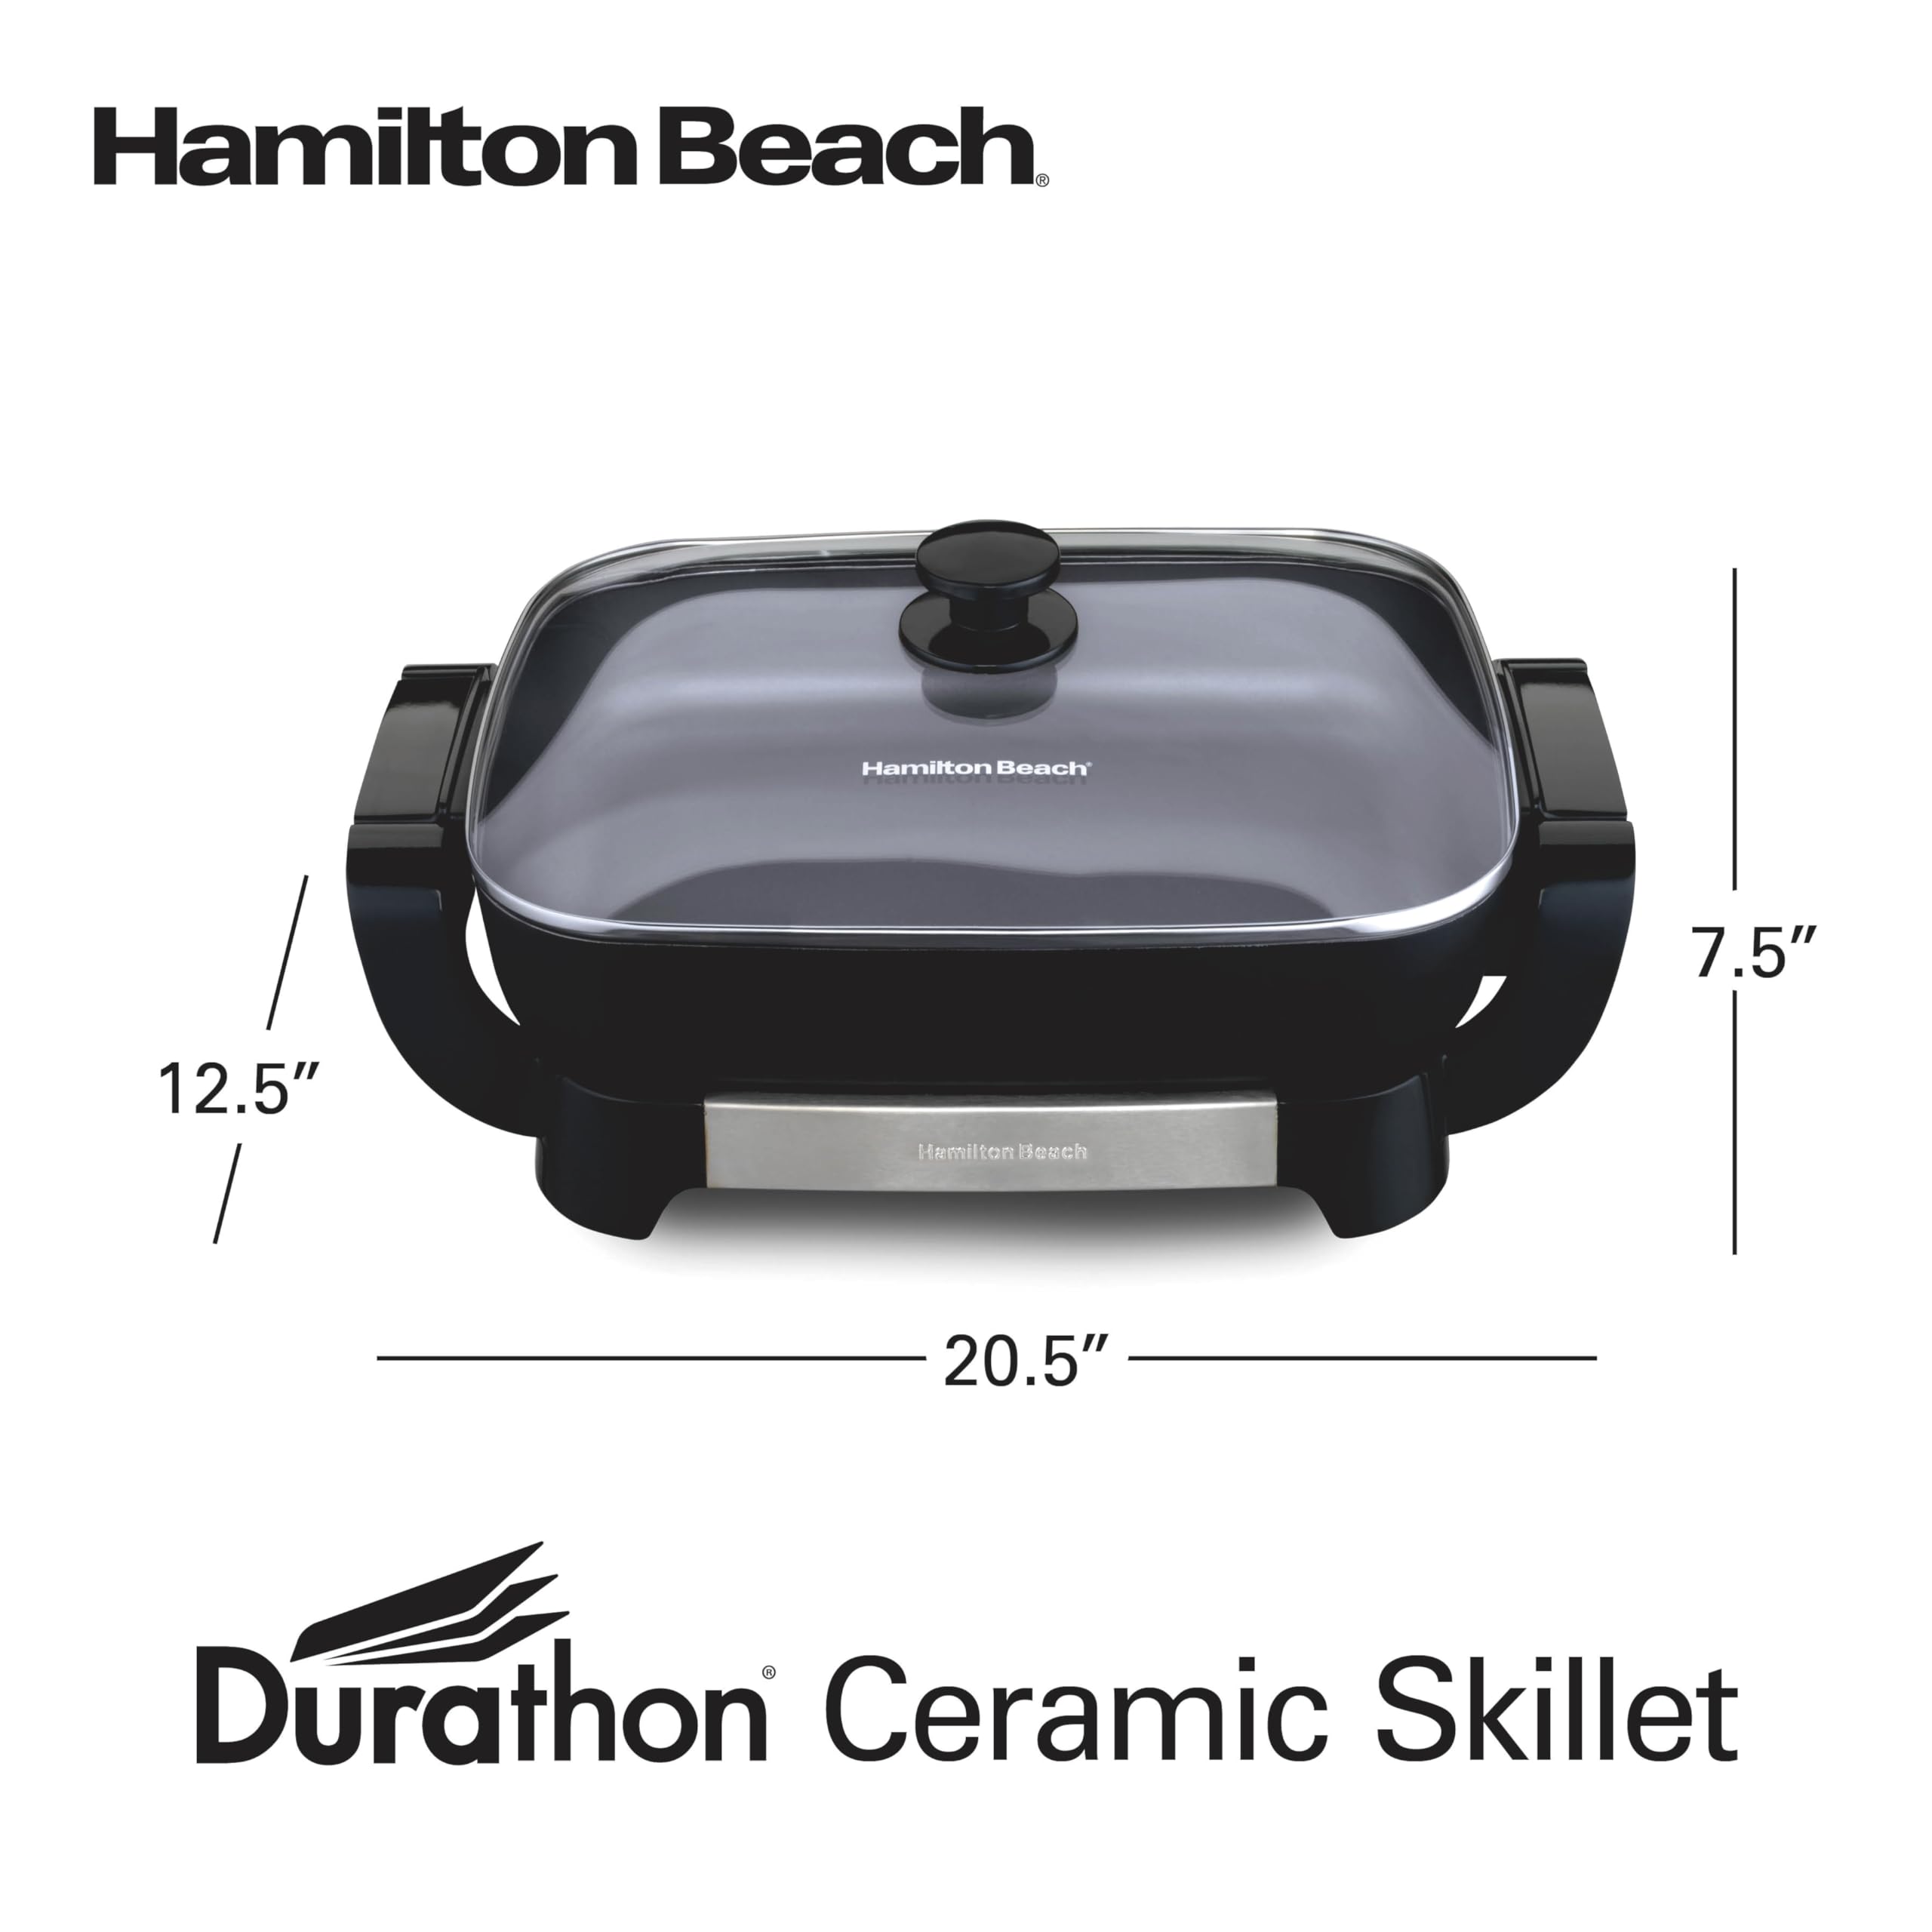 Hamilton Beach Durathon Ceramic Electric Skillet with Removable 12x15” Pan, Adjustable Temperature, Reversible Design, Tempered Glass Lid (38531)